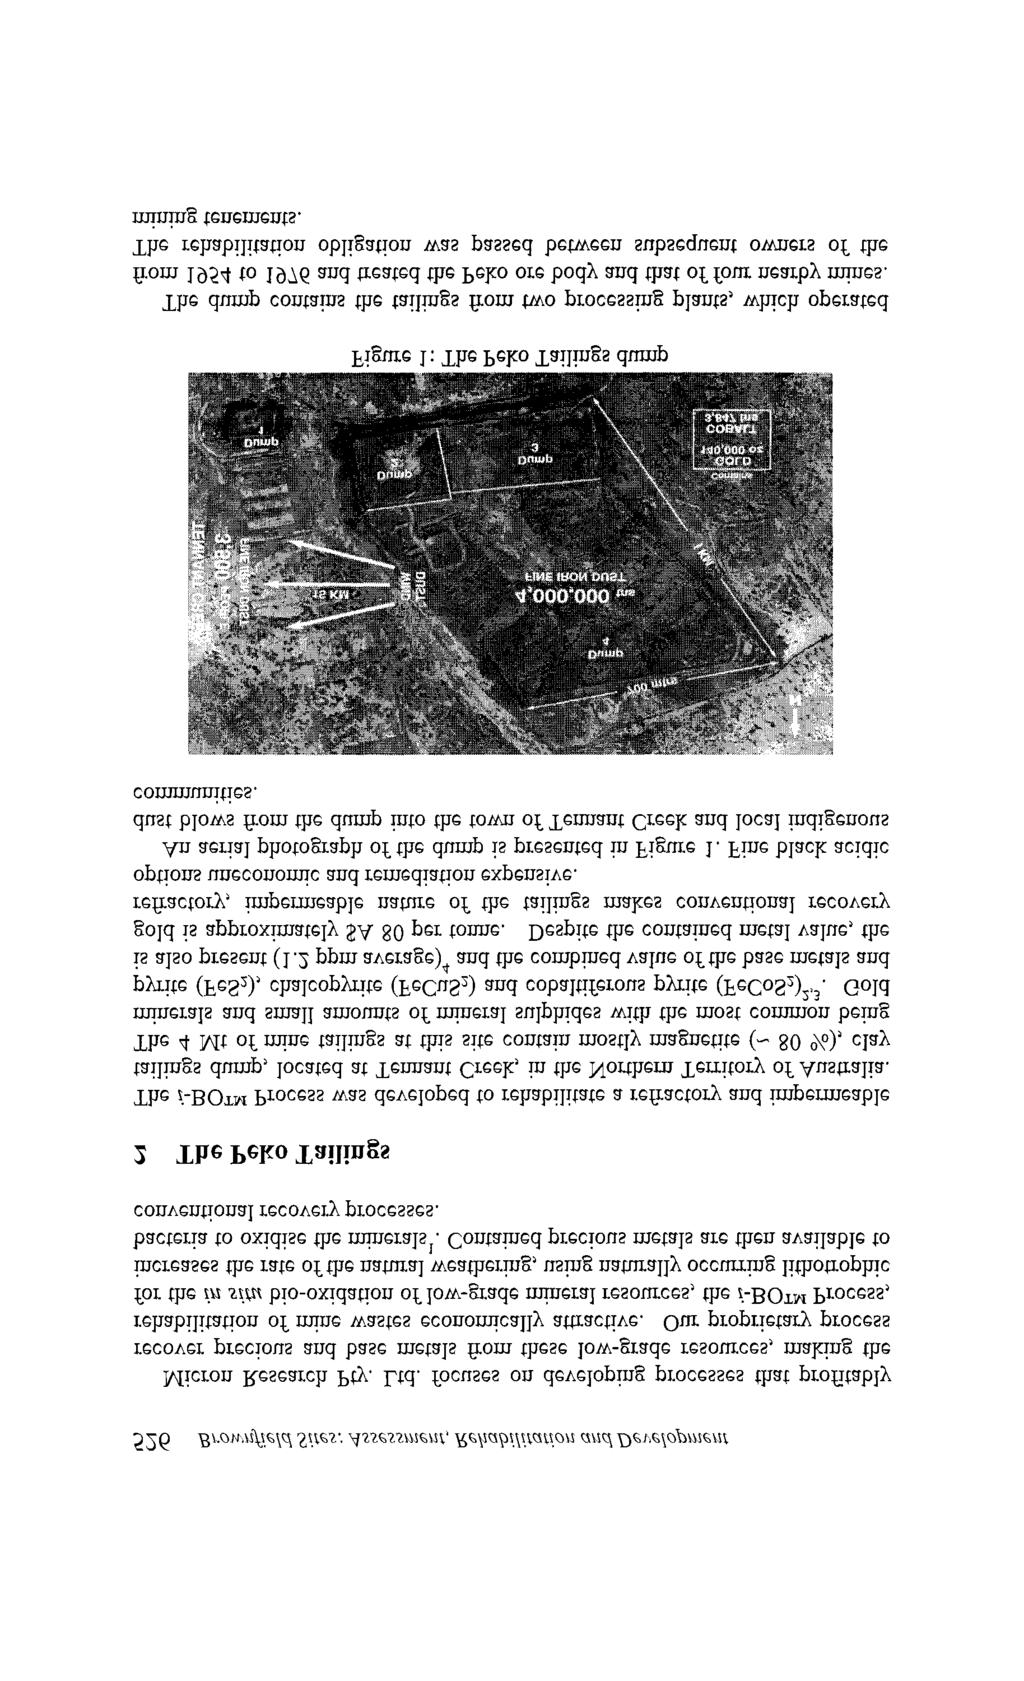 526 Browtfield Sites: Assessment, Rehabilitation and De~elopntent Micron Research Pty, Ltd.